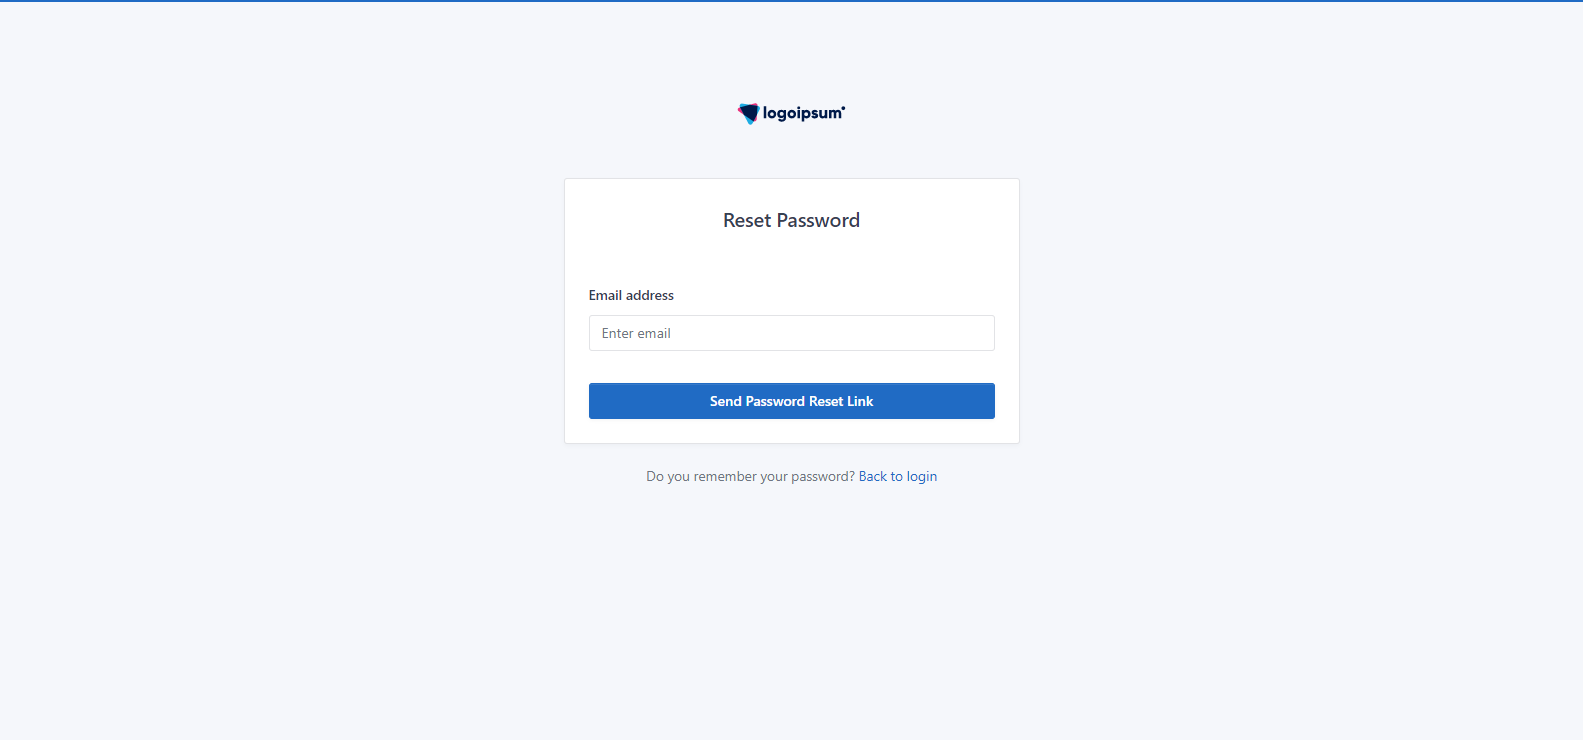 reset-password.png